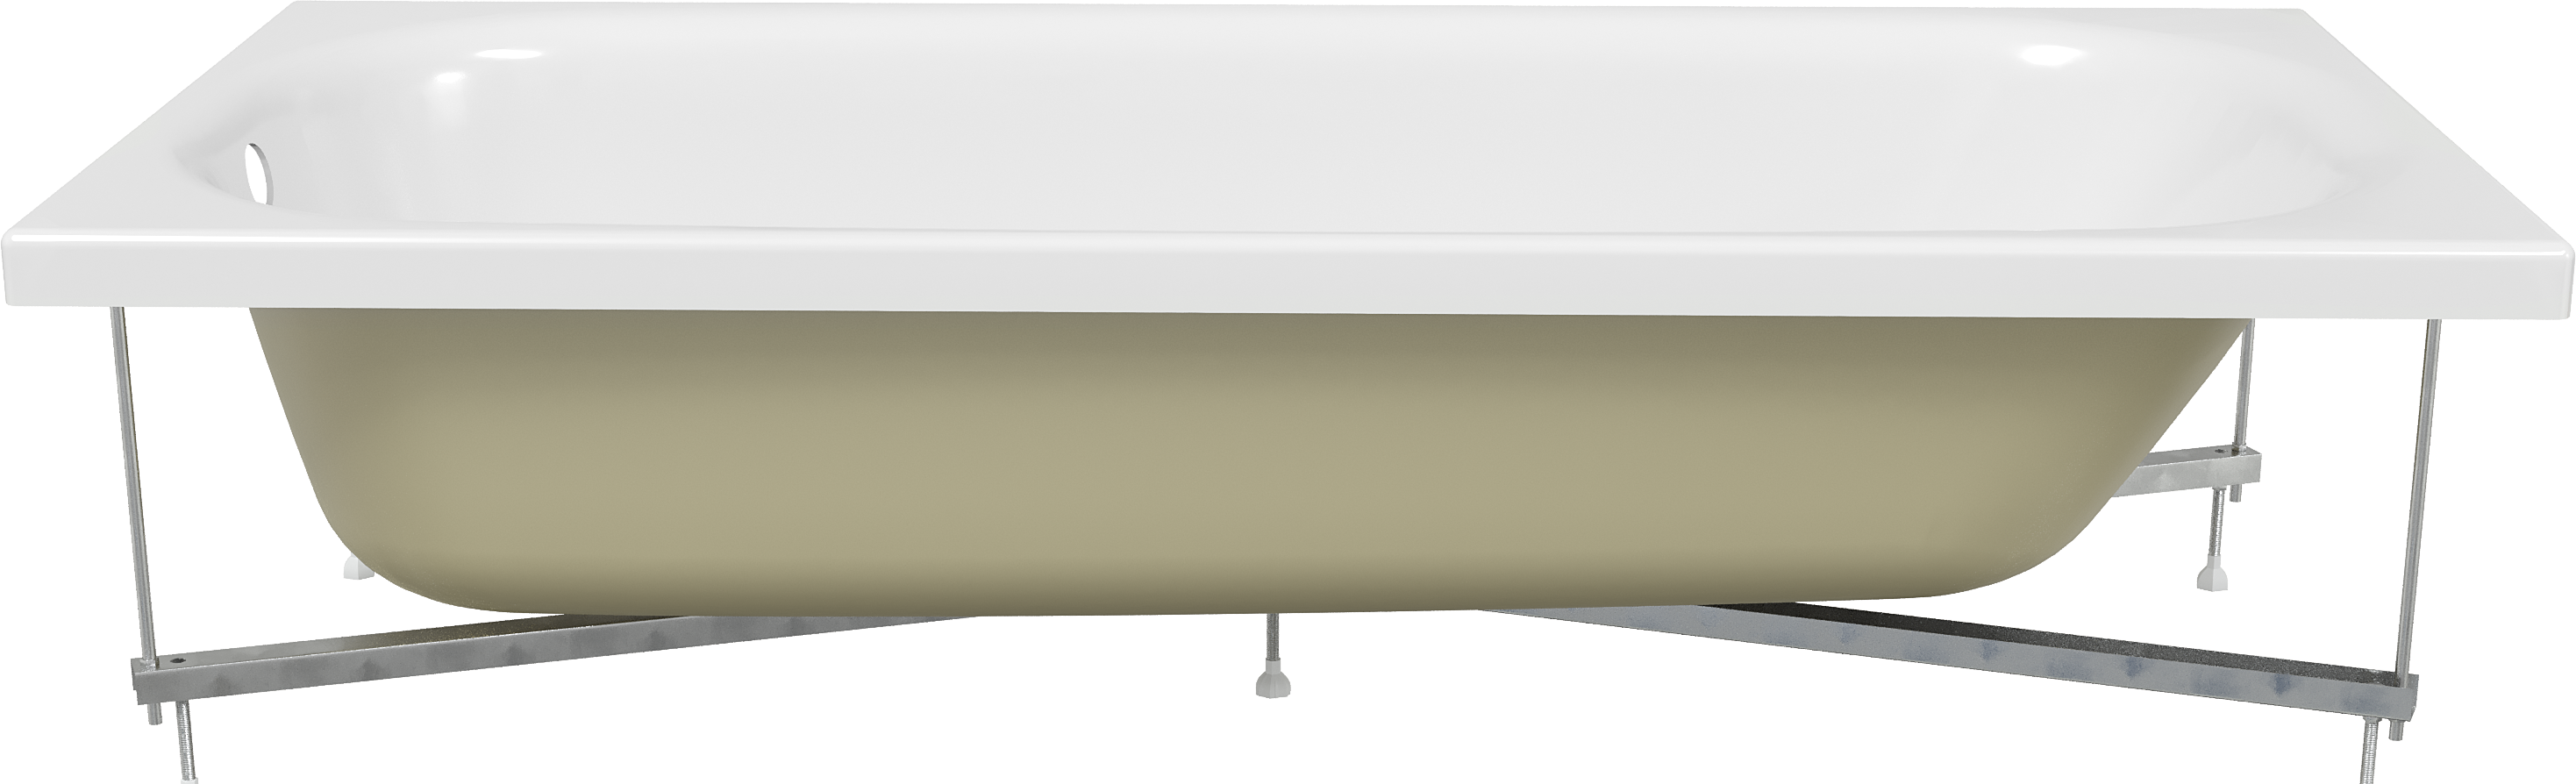 Акриловая ванна DIWO Анапа 170x70 с каркасом 567512 - 8